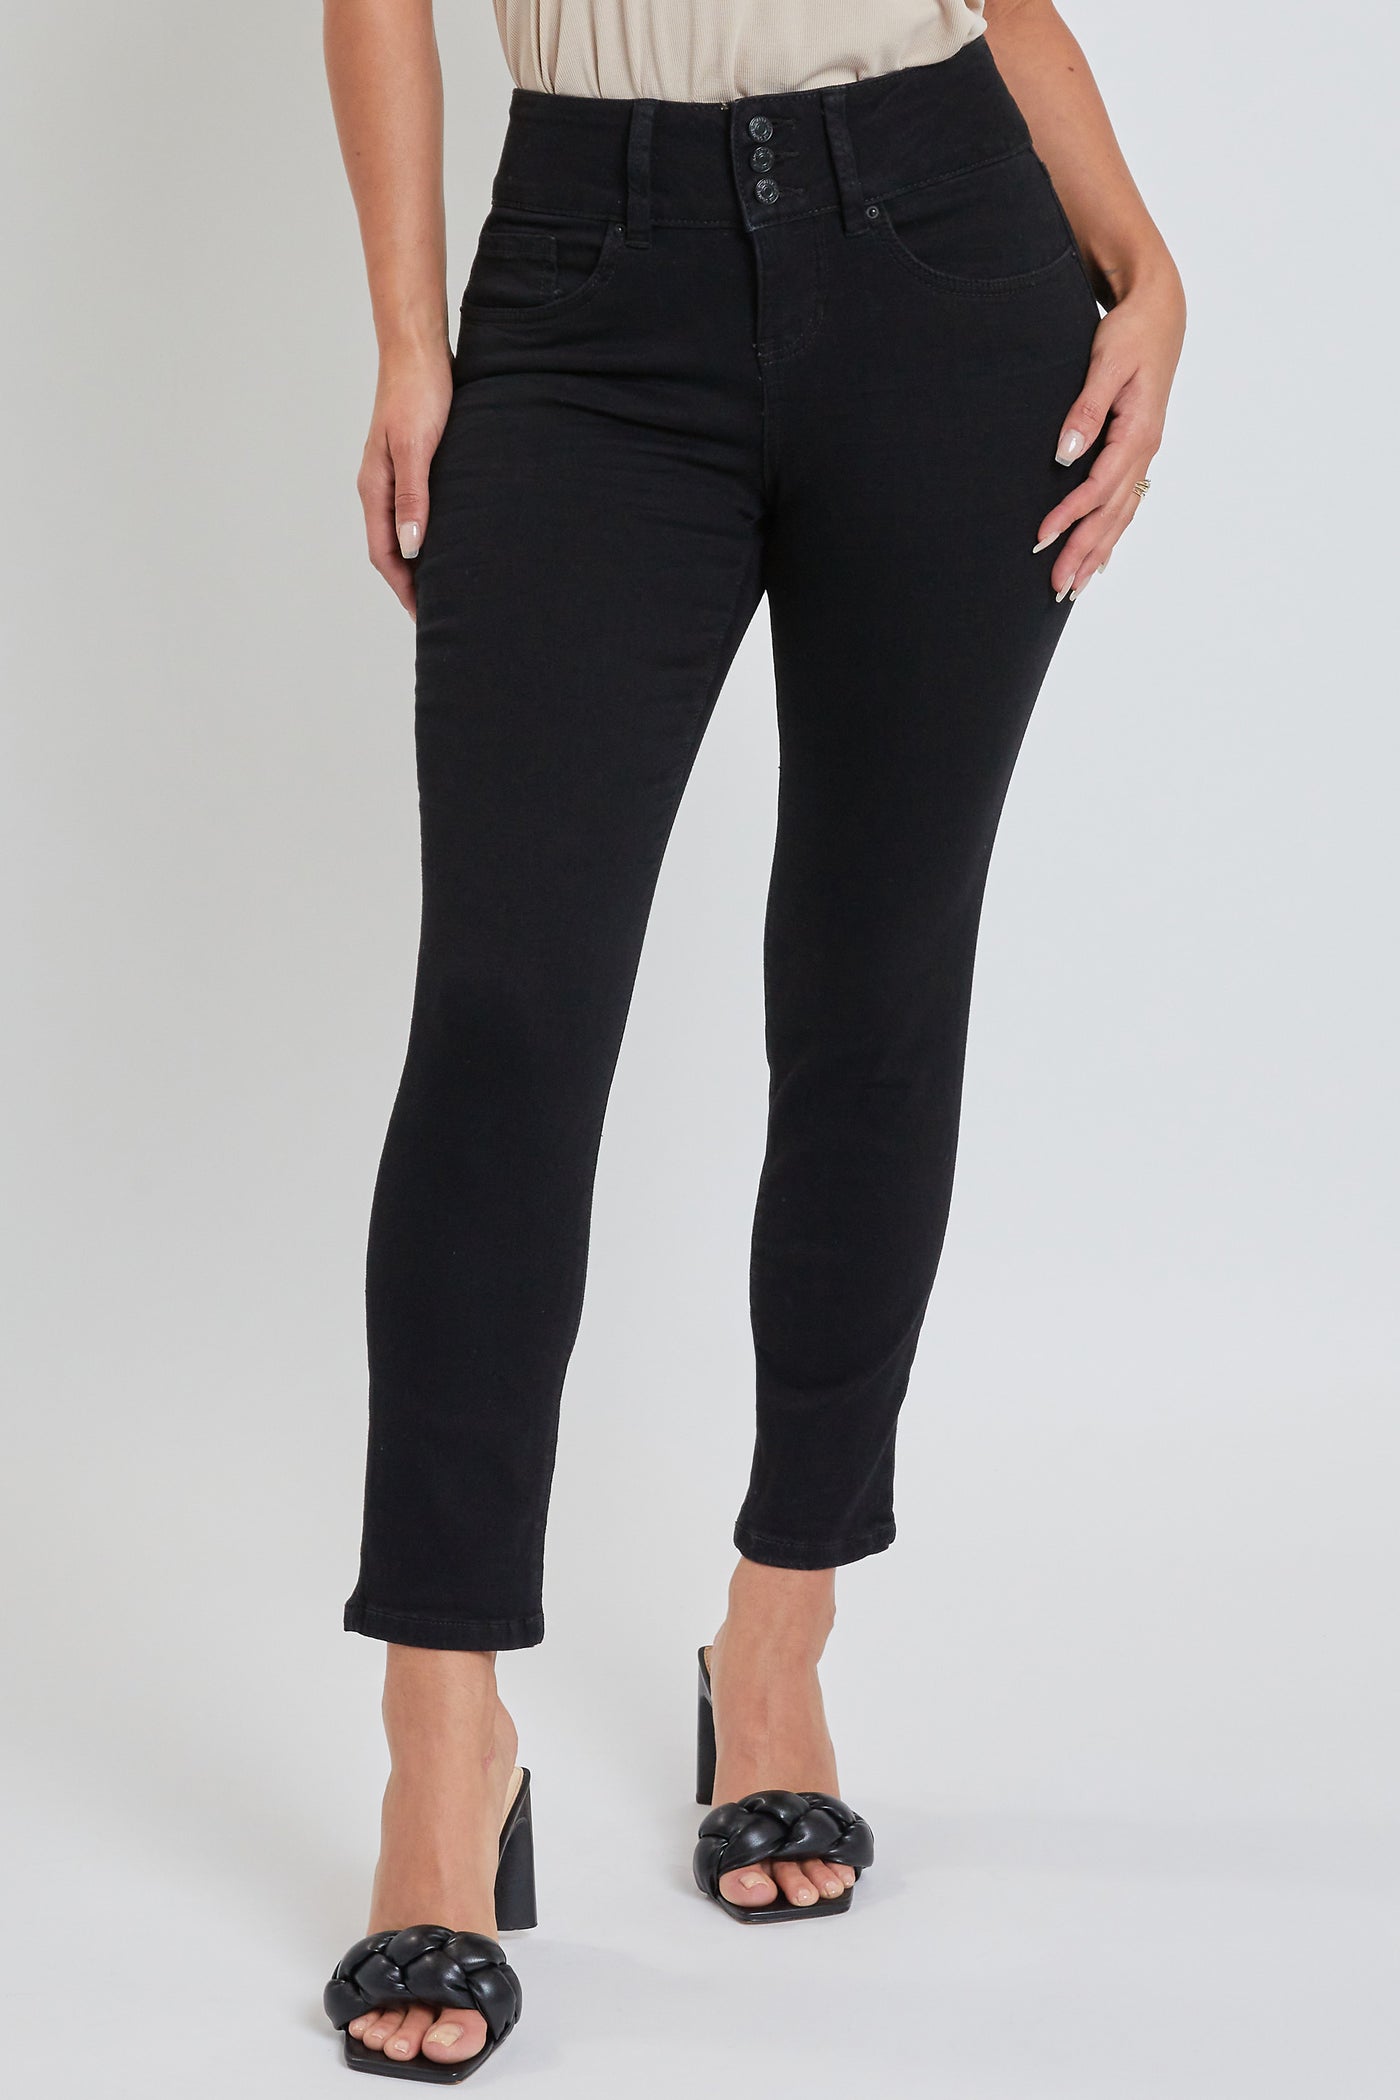 Women's Petite 3 Button High Rise Skinny Jean